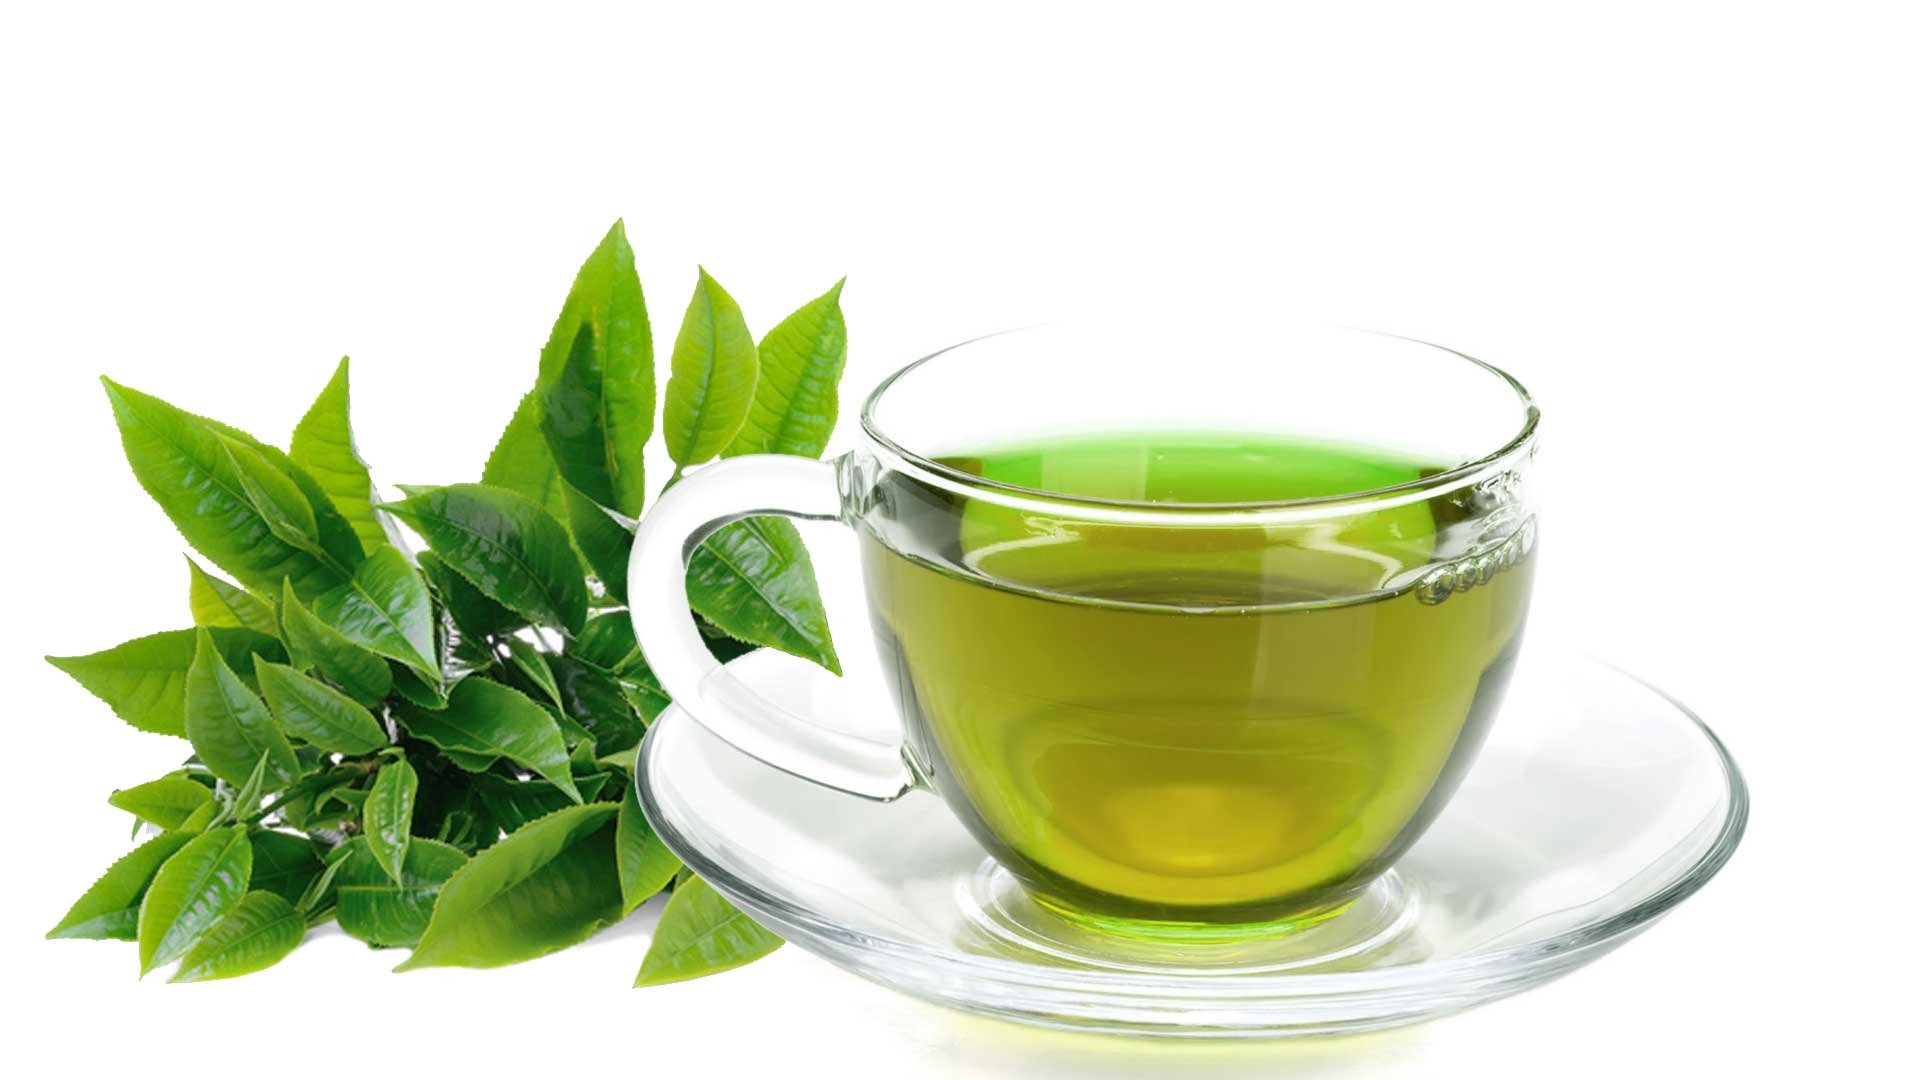 фото кружки зеленого чая